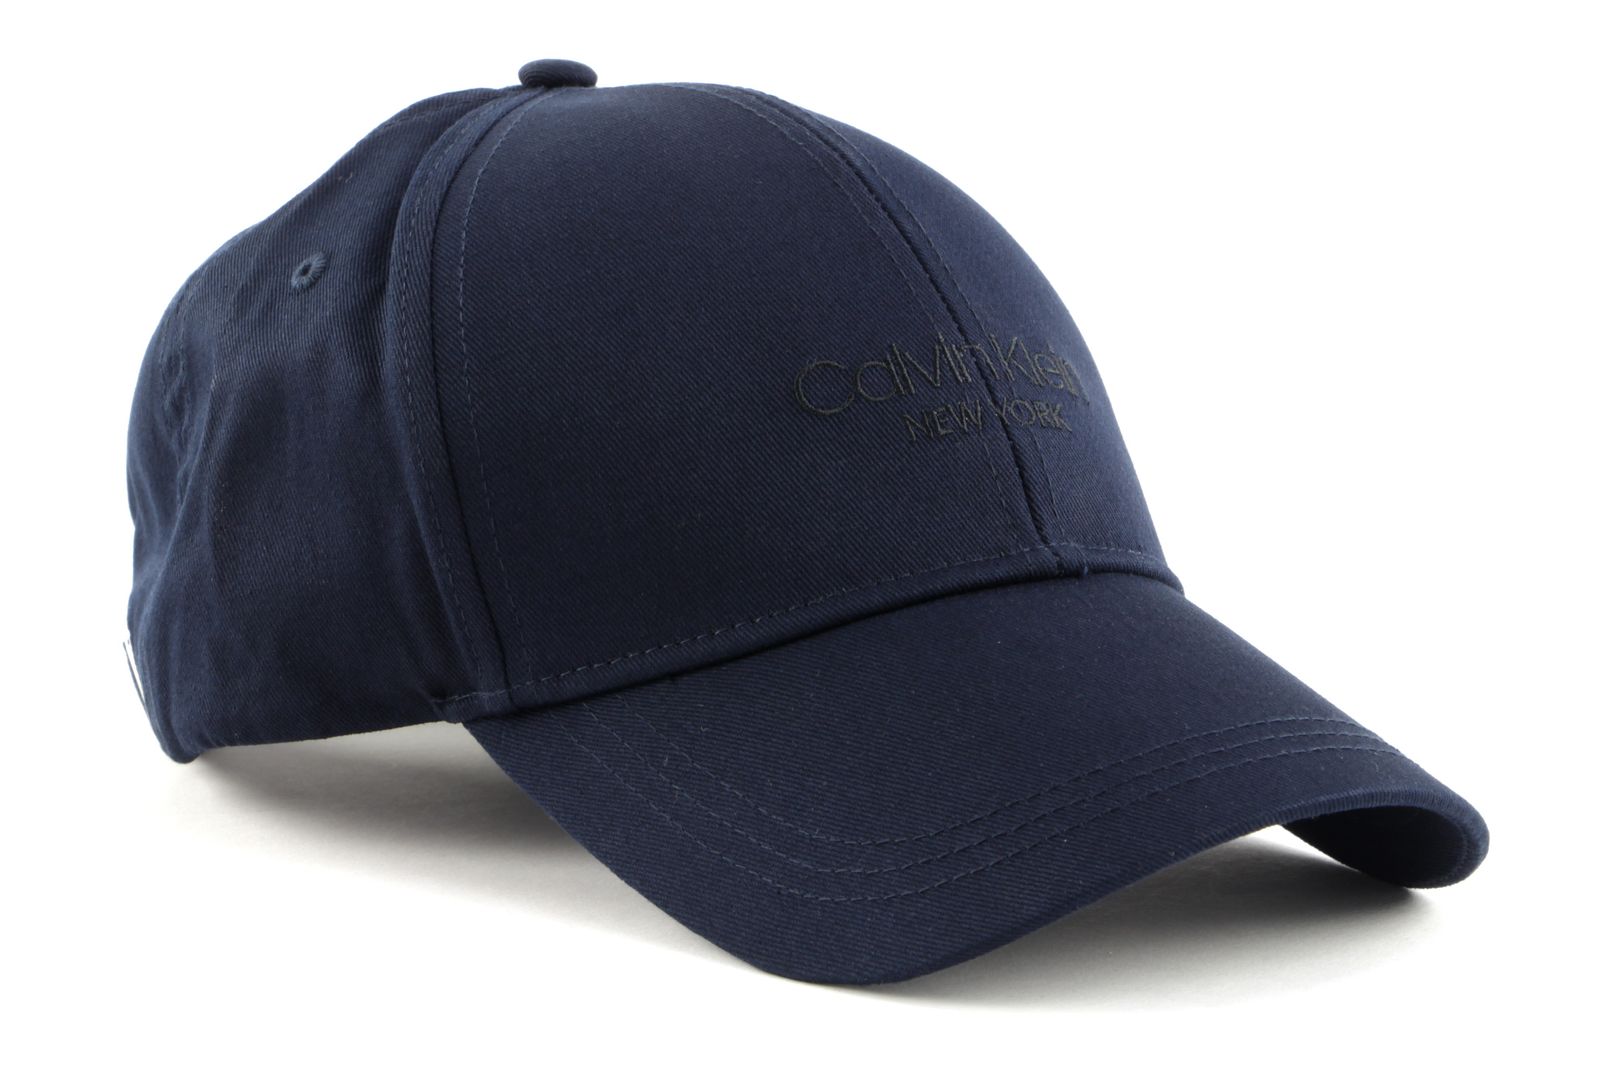 Calvin Klein Cap BB Cap modeherz bags, & online | Navy | CK Buy purses accessories